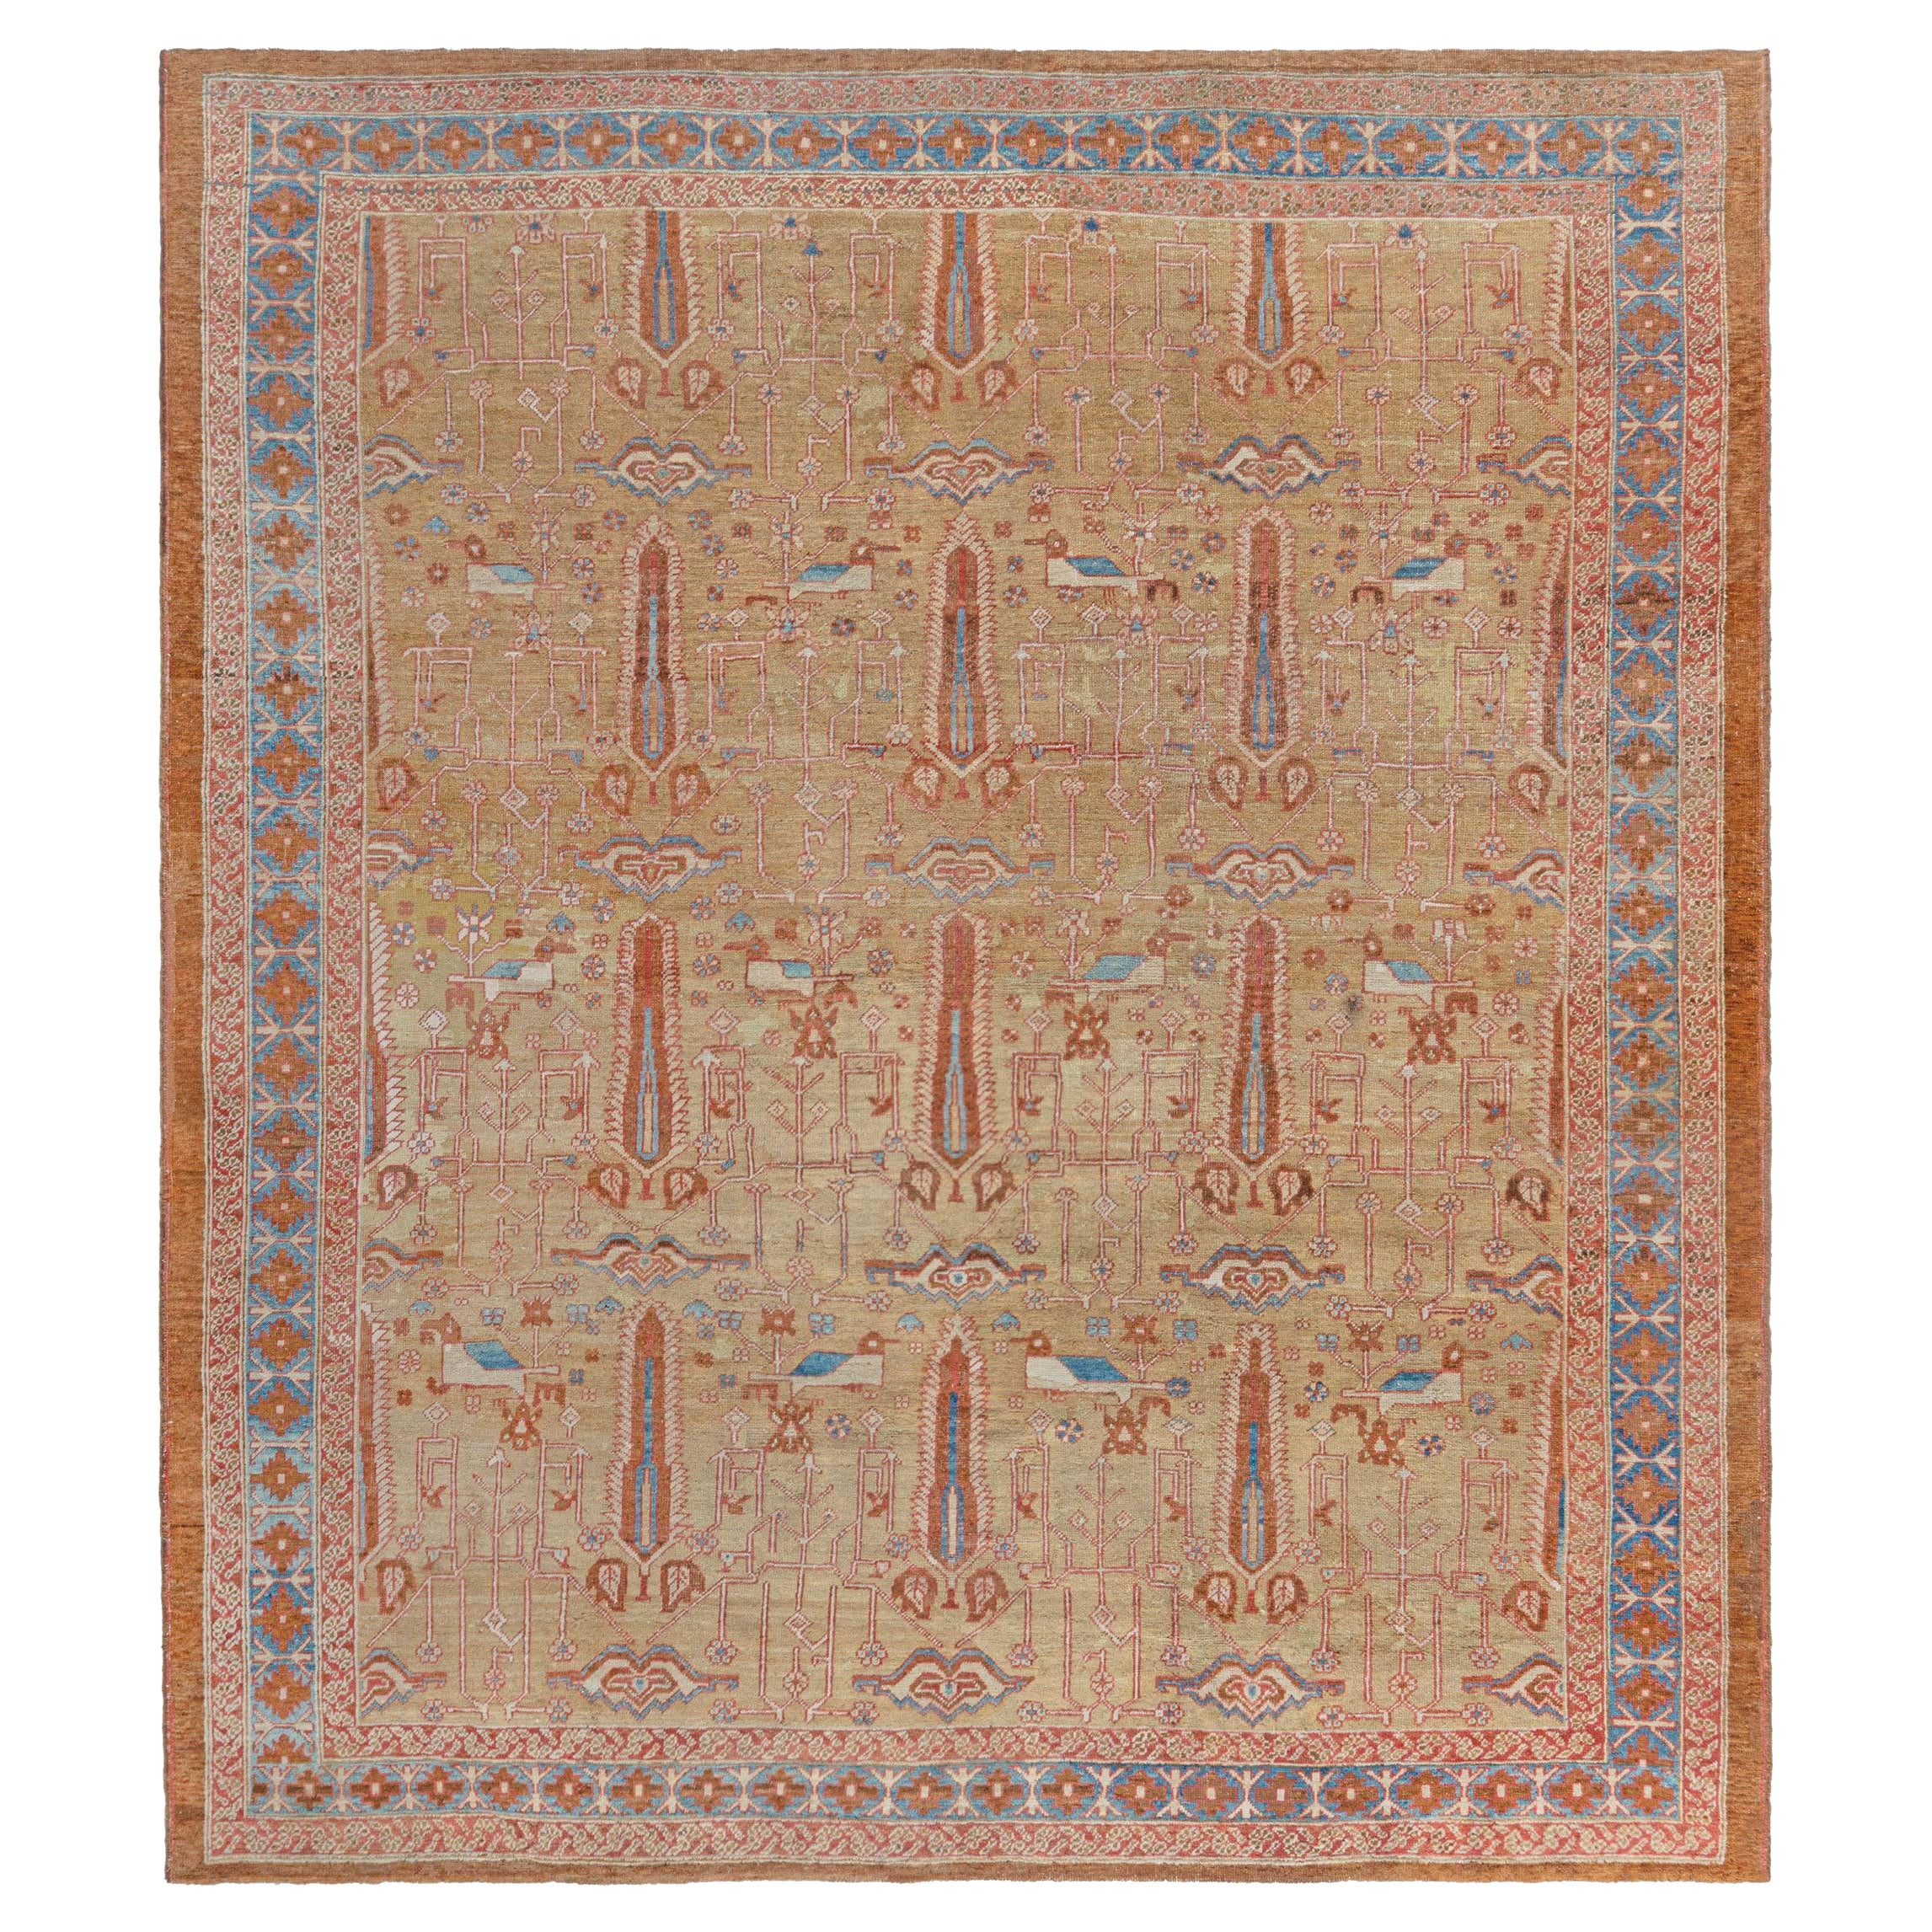 Early 19th Century Primitive Bakshaish Carpet